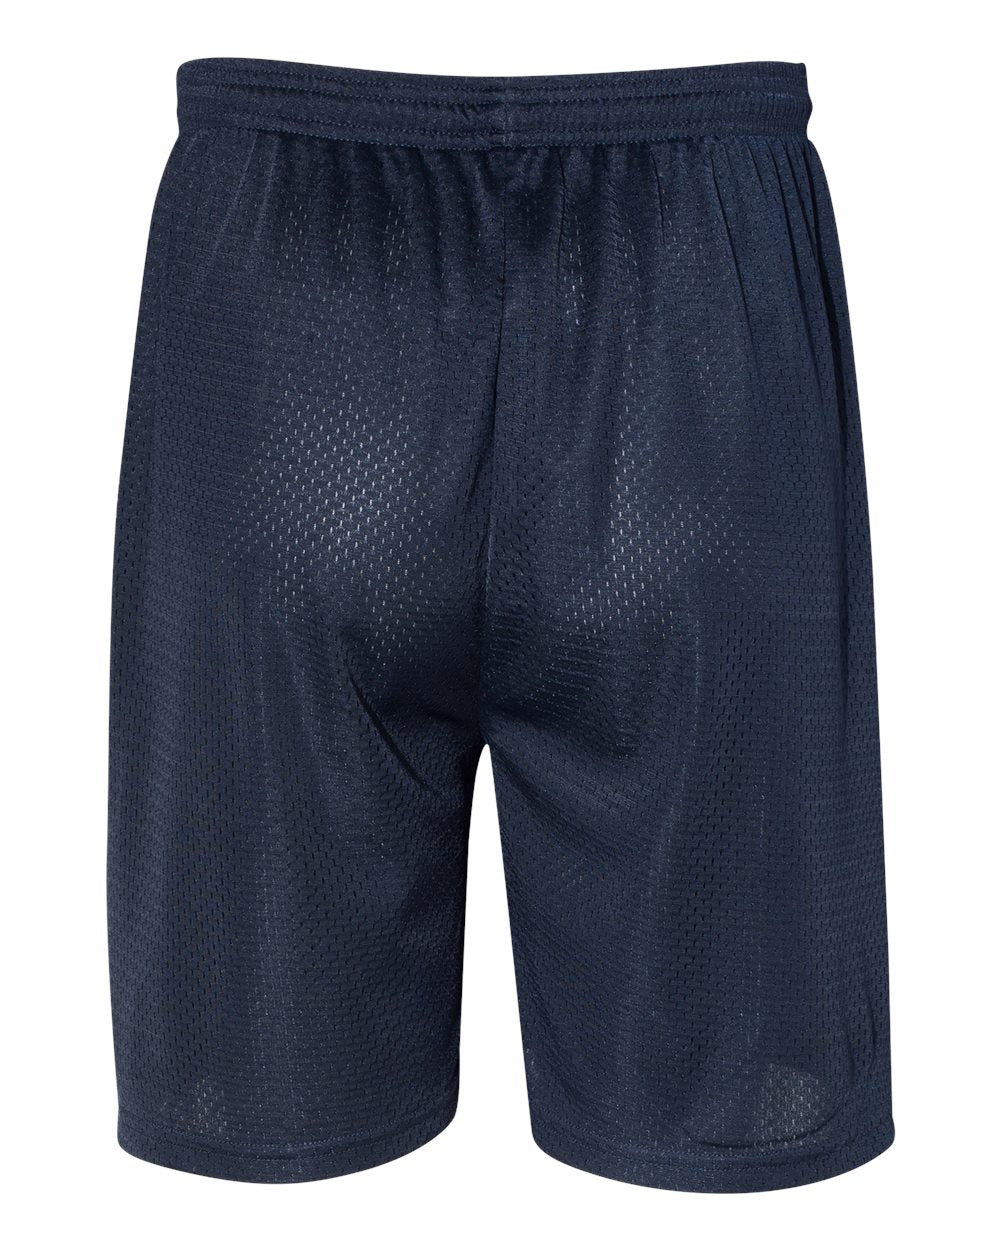 C2 Sport Mesh 7" Shorts 5107 #color_Navy